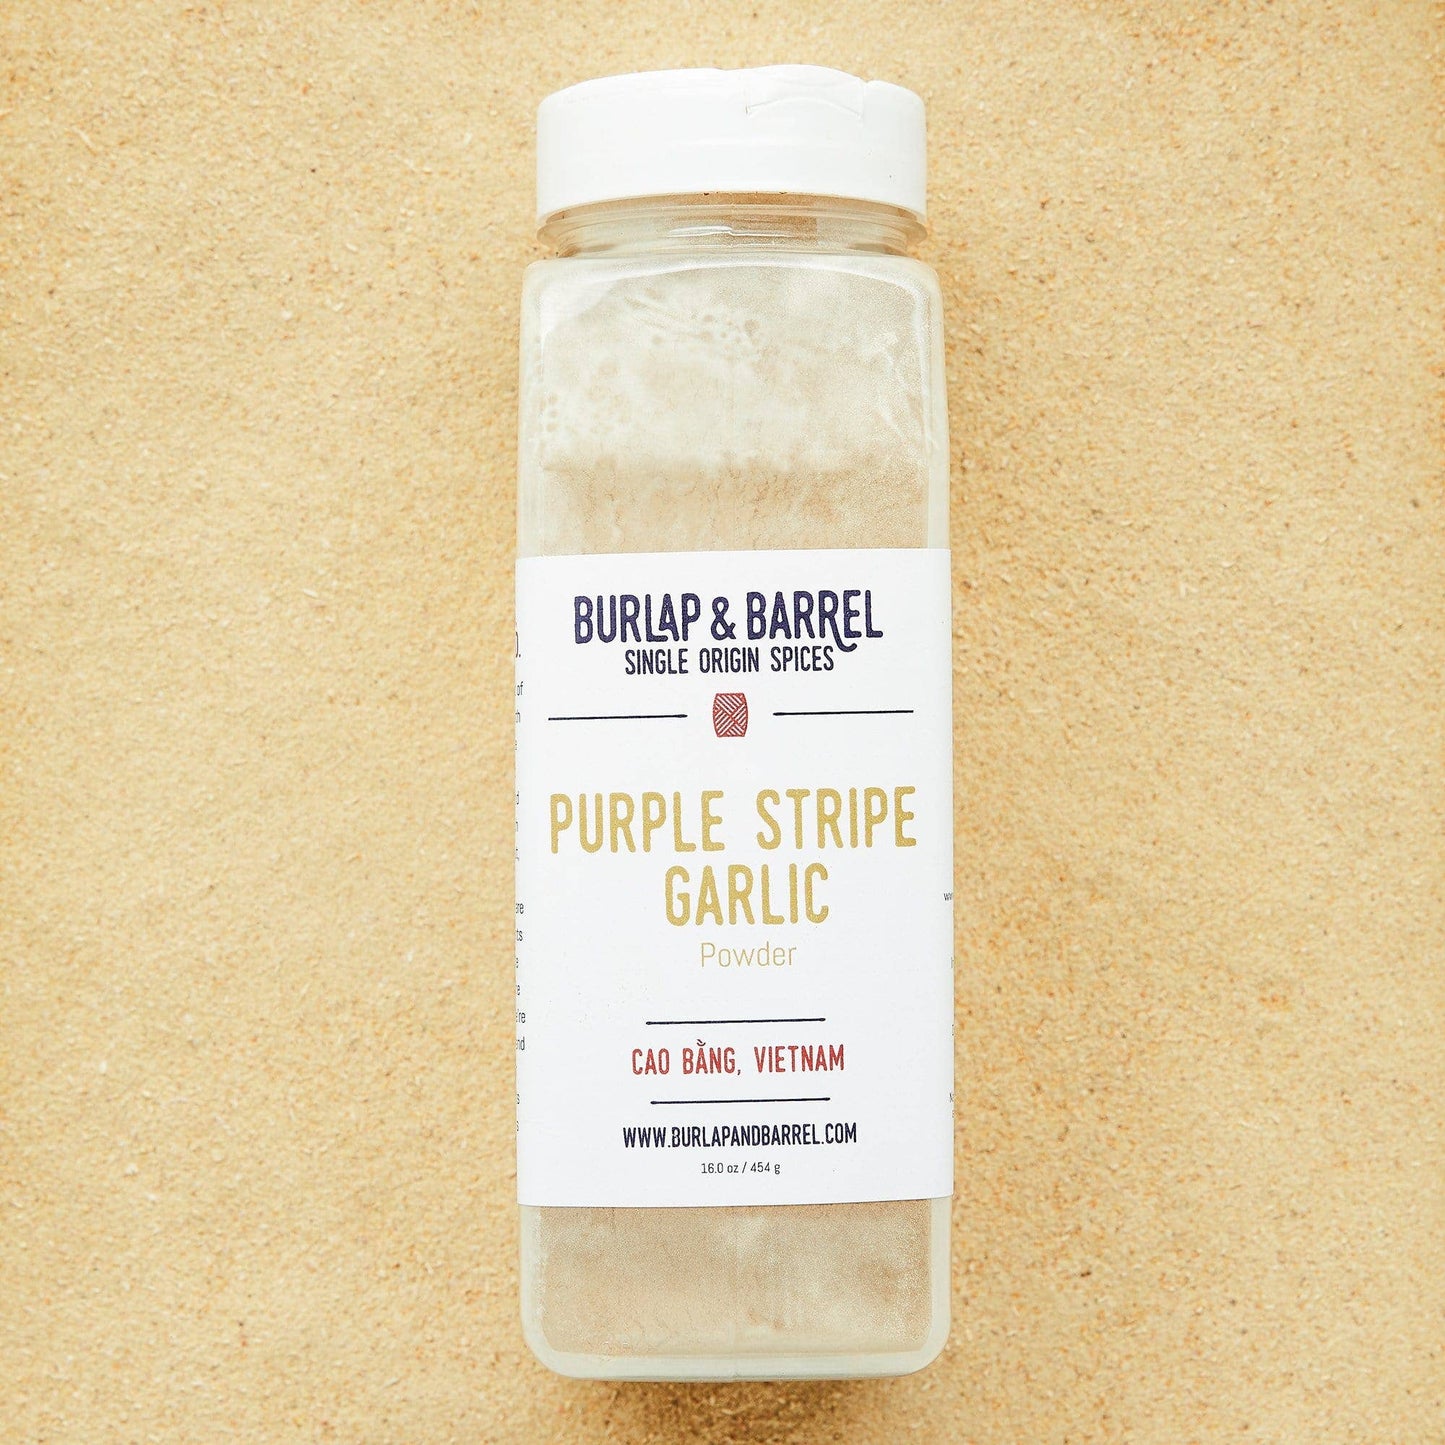 Burlap & Barrel - Purple Stripe Garlic - Single Origin Spice & Seasoning: 3.0 oz glass jar